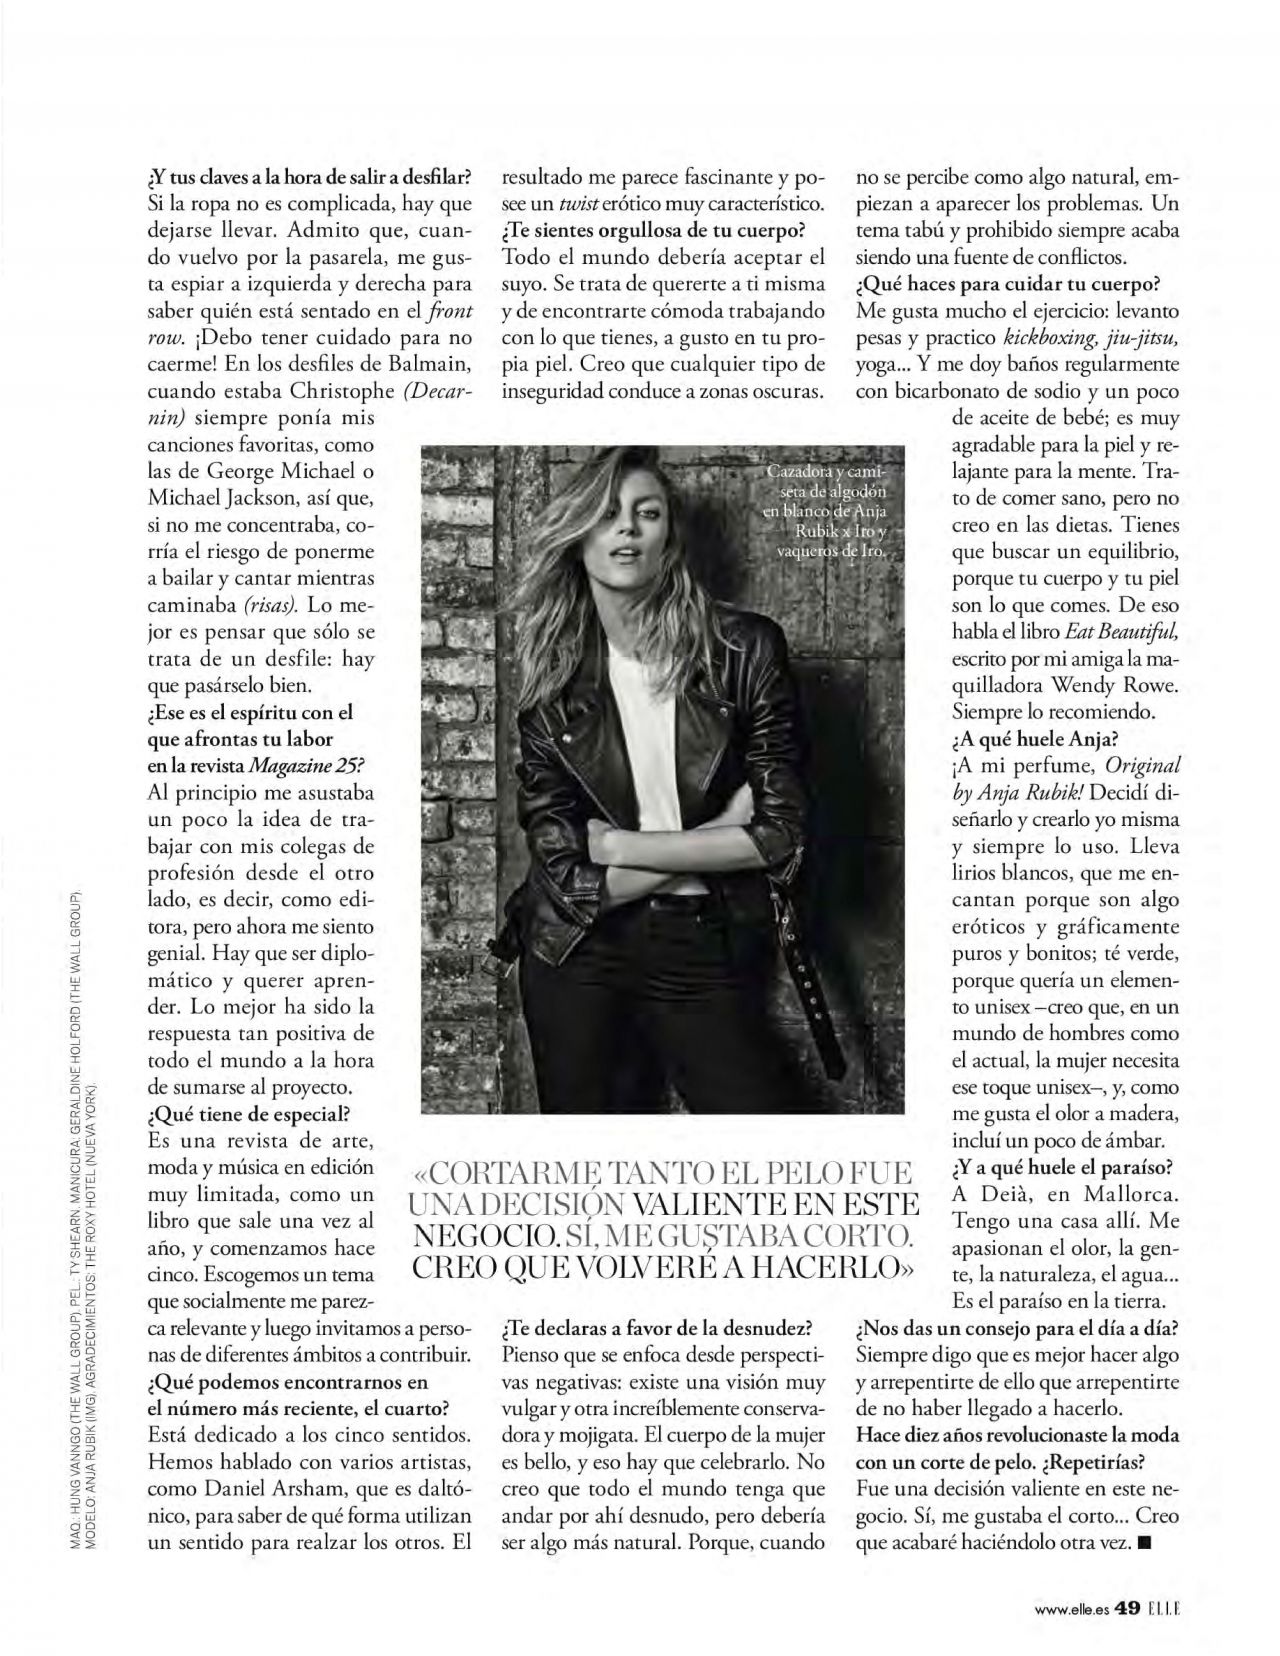 anja-rubik-modelo-de-diseno-elle-españa-july-2016-issue-9